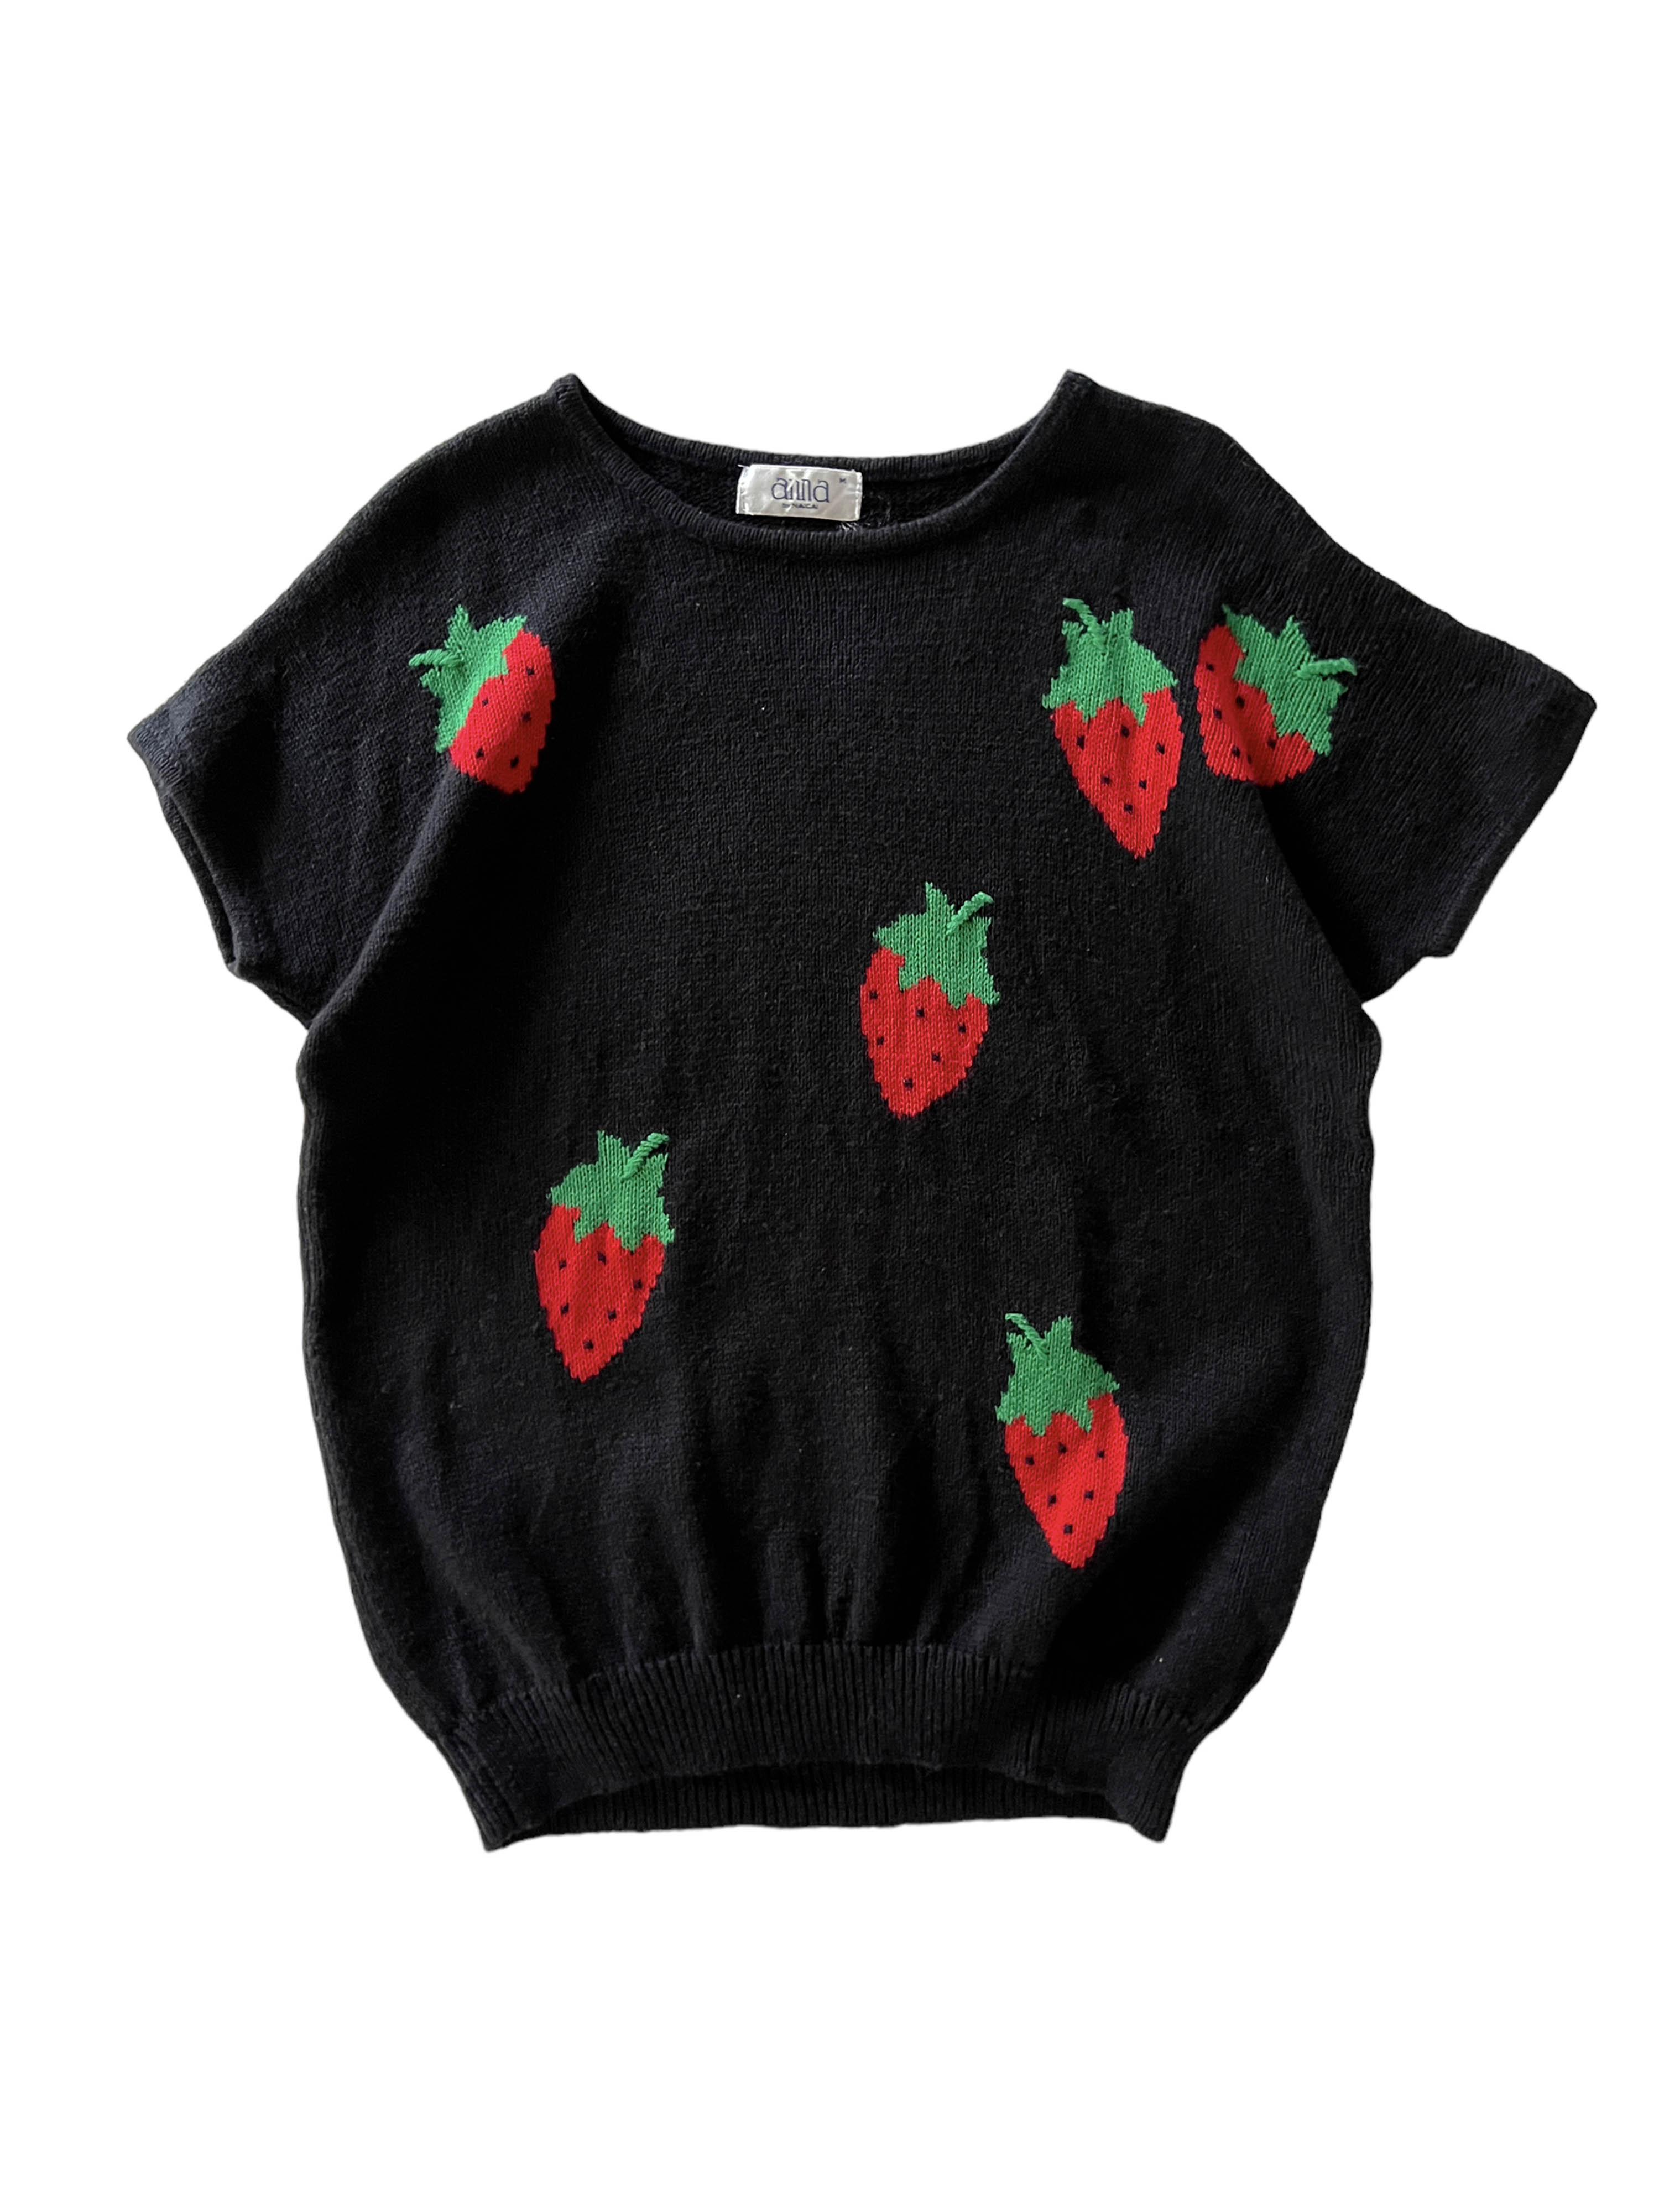 vintage strawberry knit top